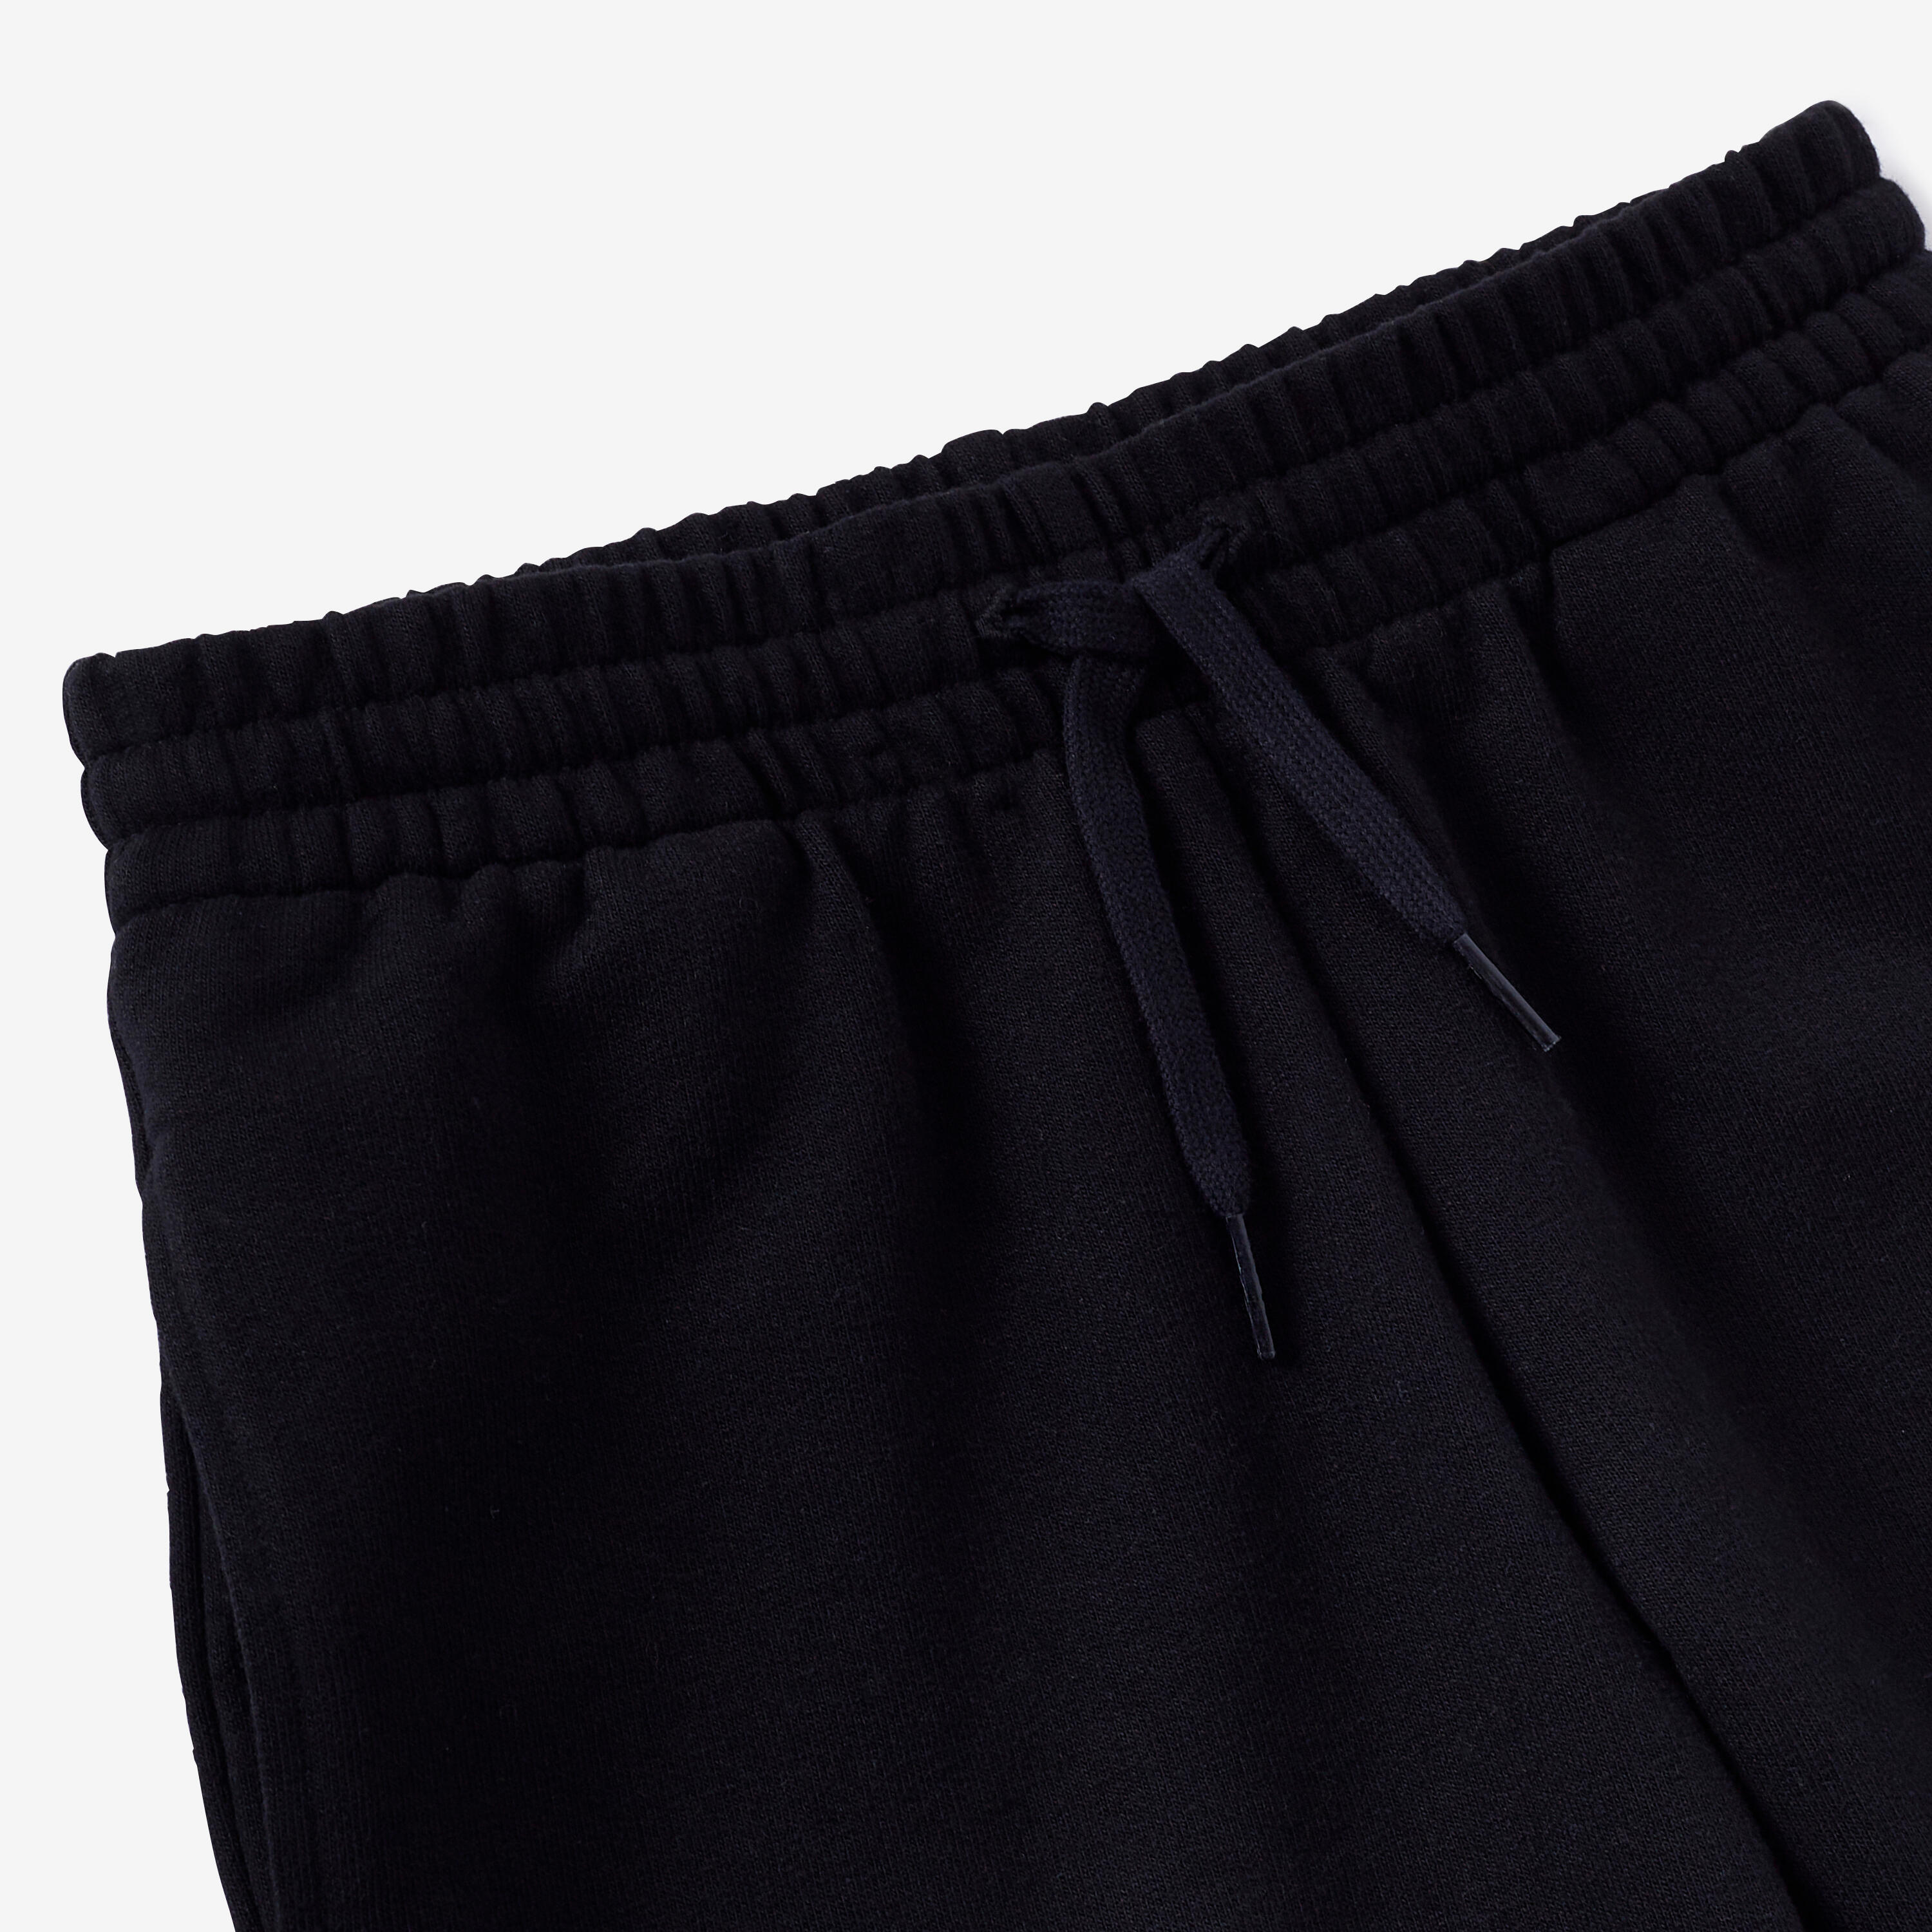 Kids' Unisex Cotton Shorts - Black 4/7